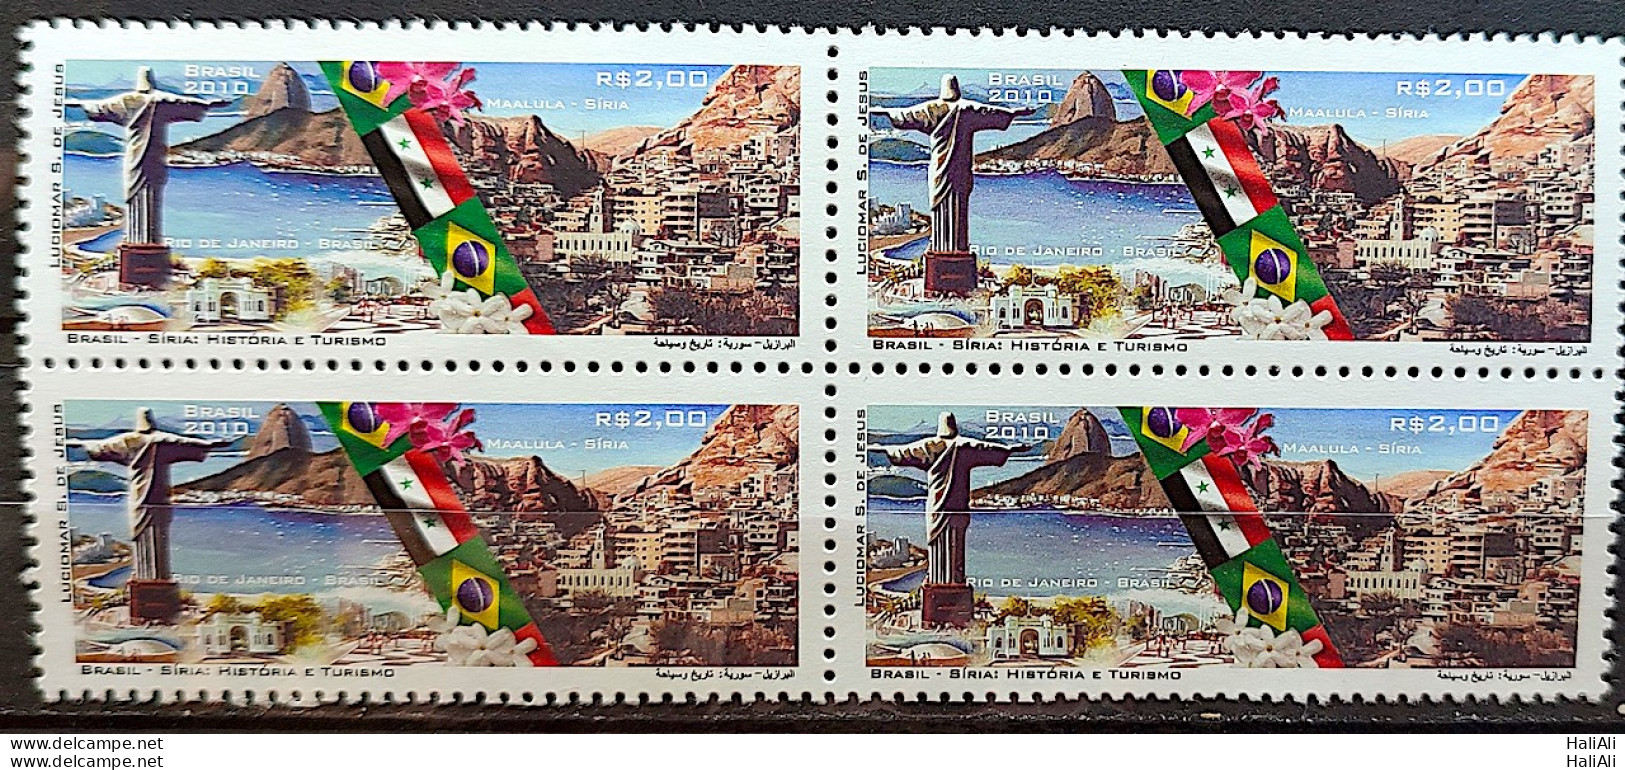 C 2983 Brazil Stamp Diplomatic Relations Syria Christ The Redeemer RJ Flag 2010 Block Of 4 - Ongebruikt